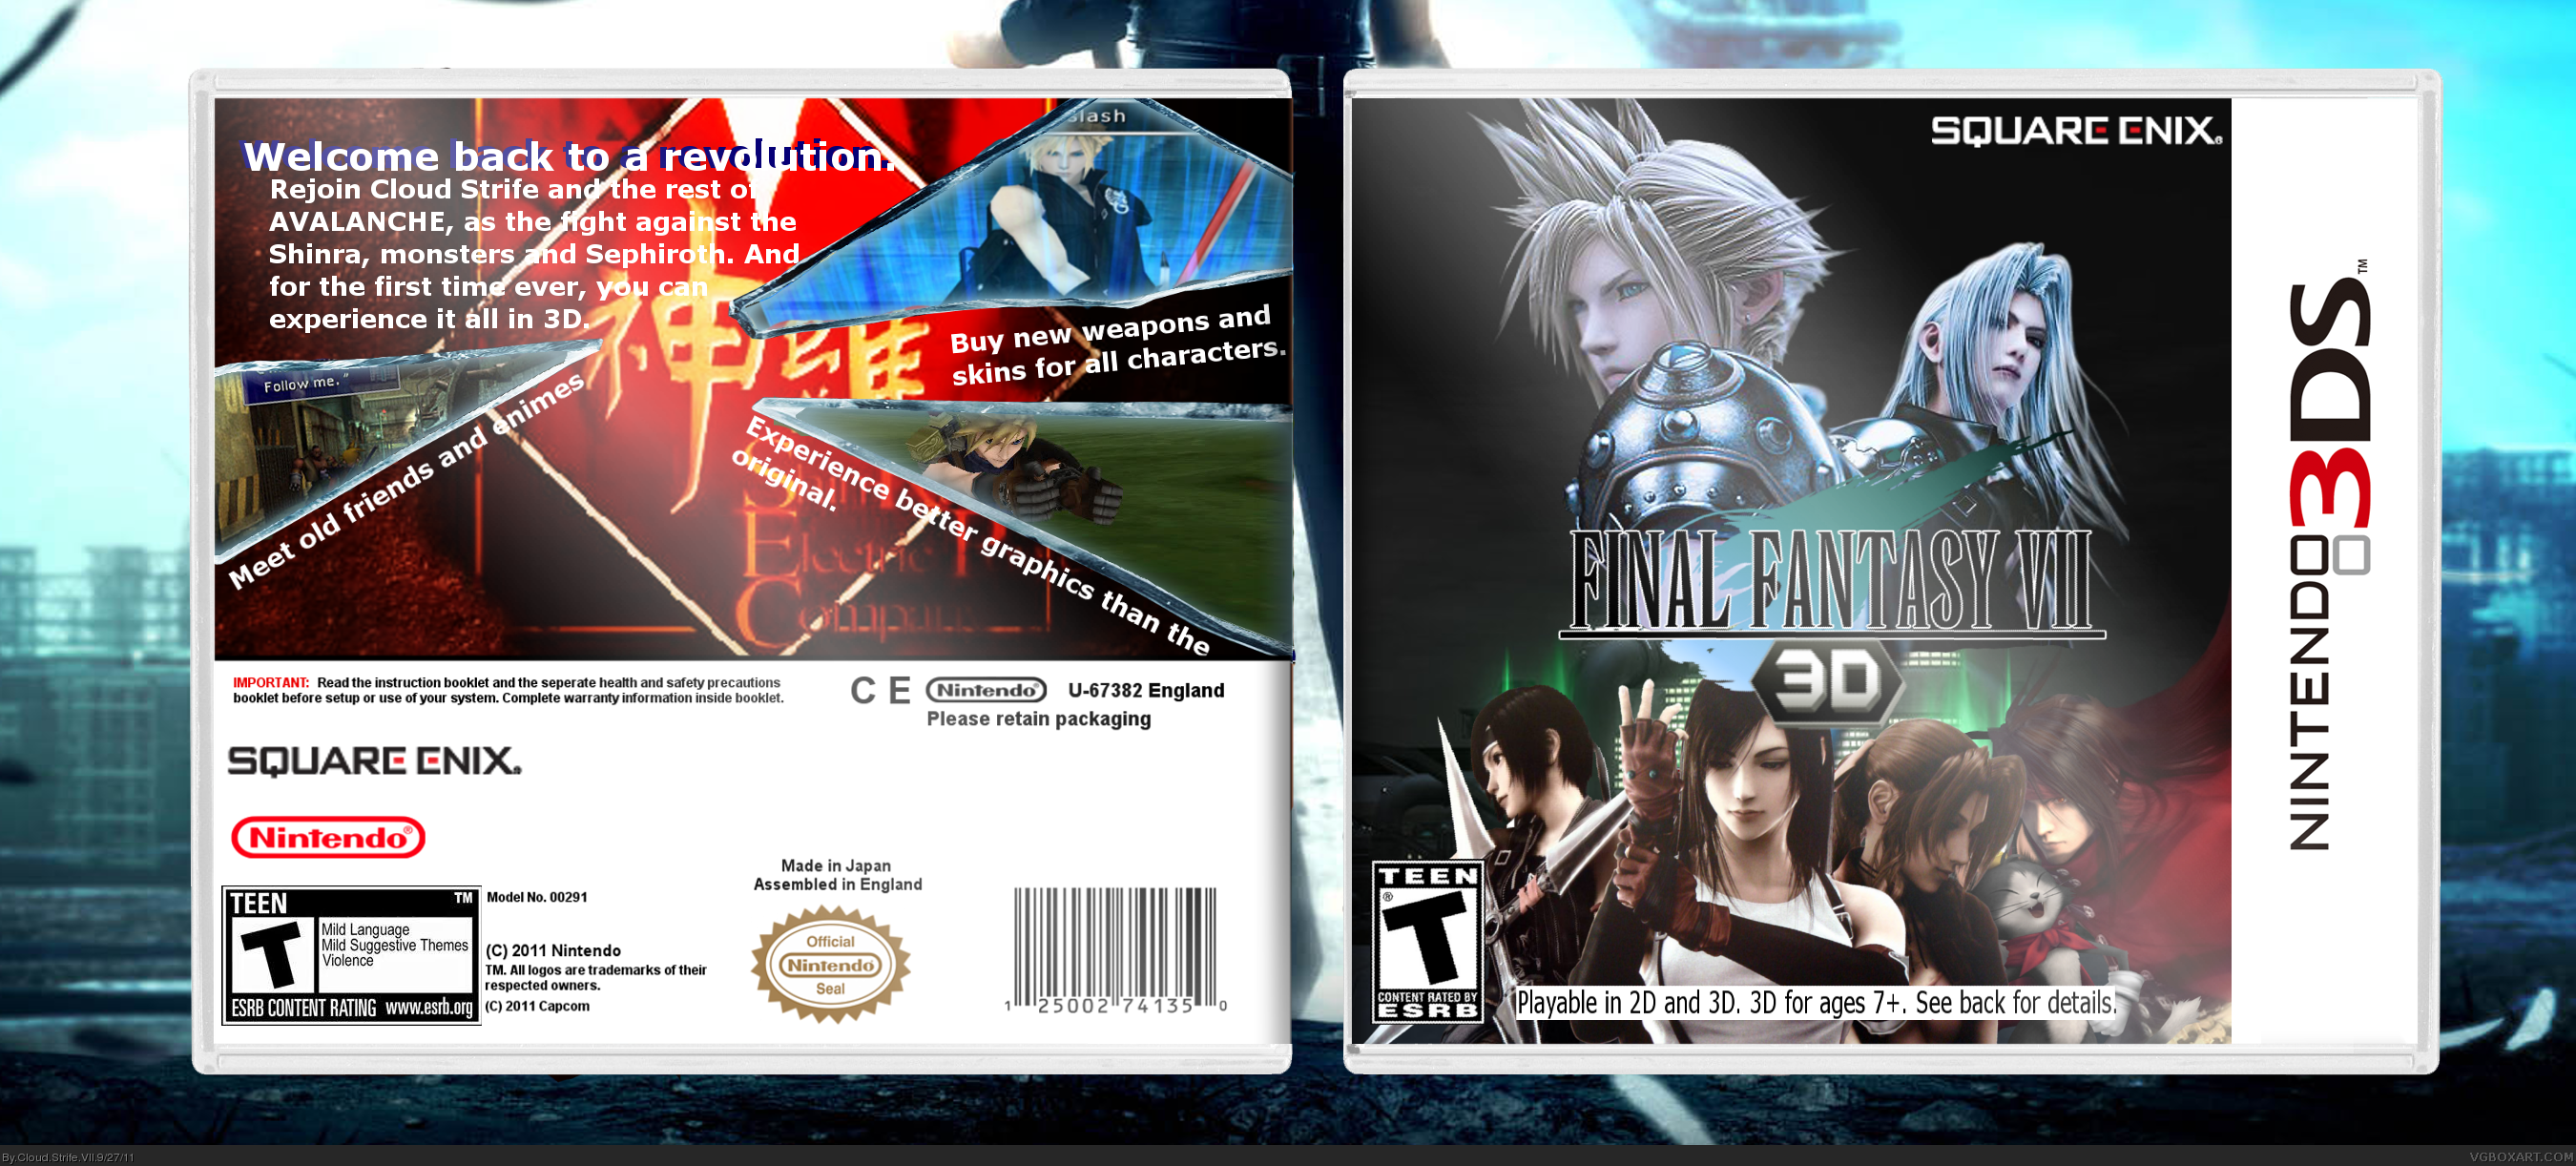 Final Fantasy VII 3D box cover